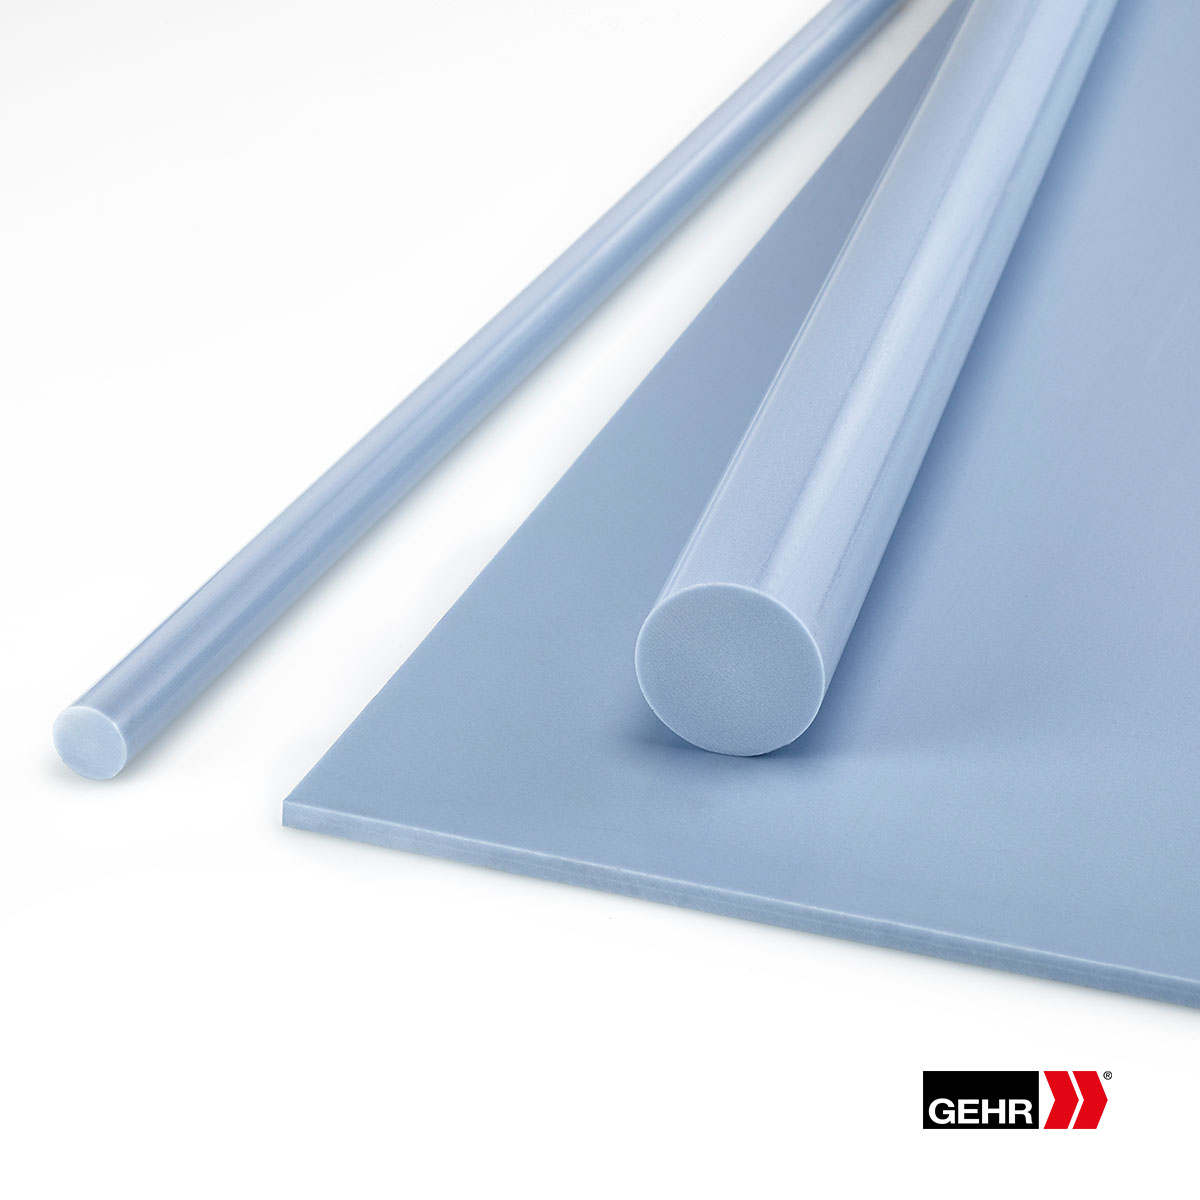 GLIDE-GEHR POM-10PE Sheets 1000 x 40 mm light blue